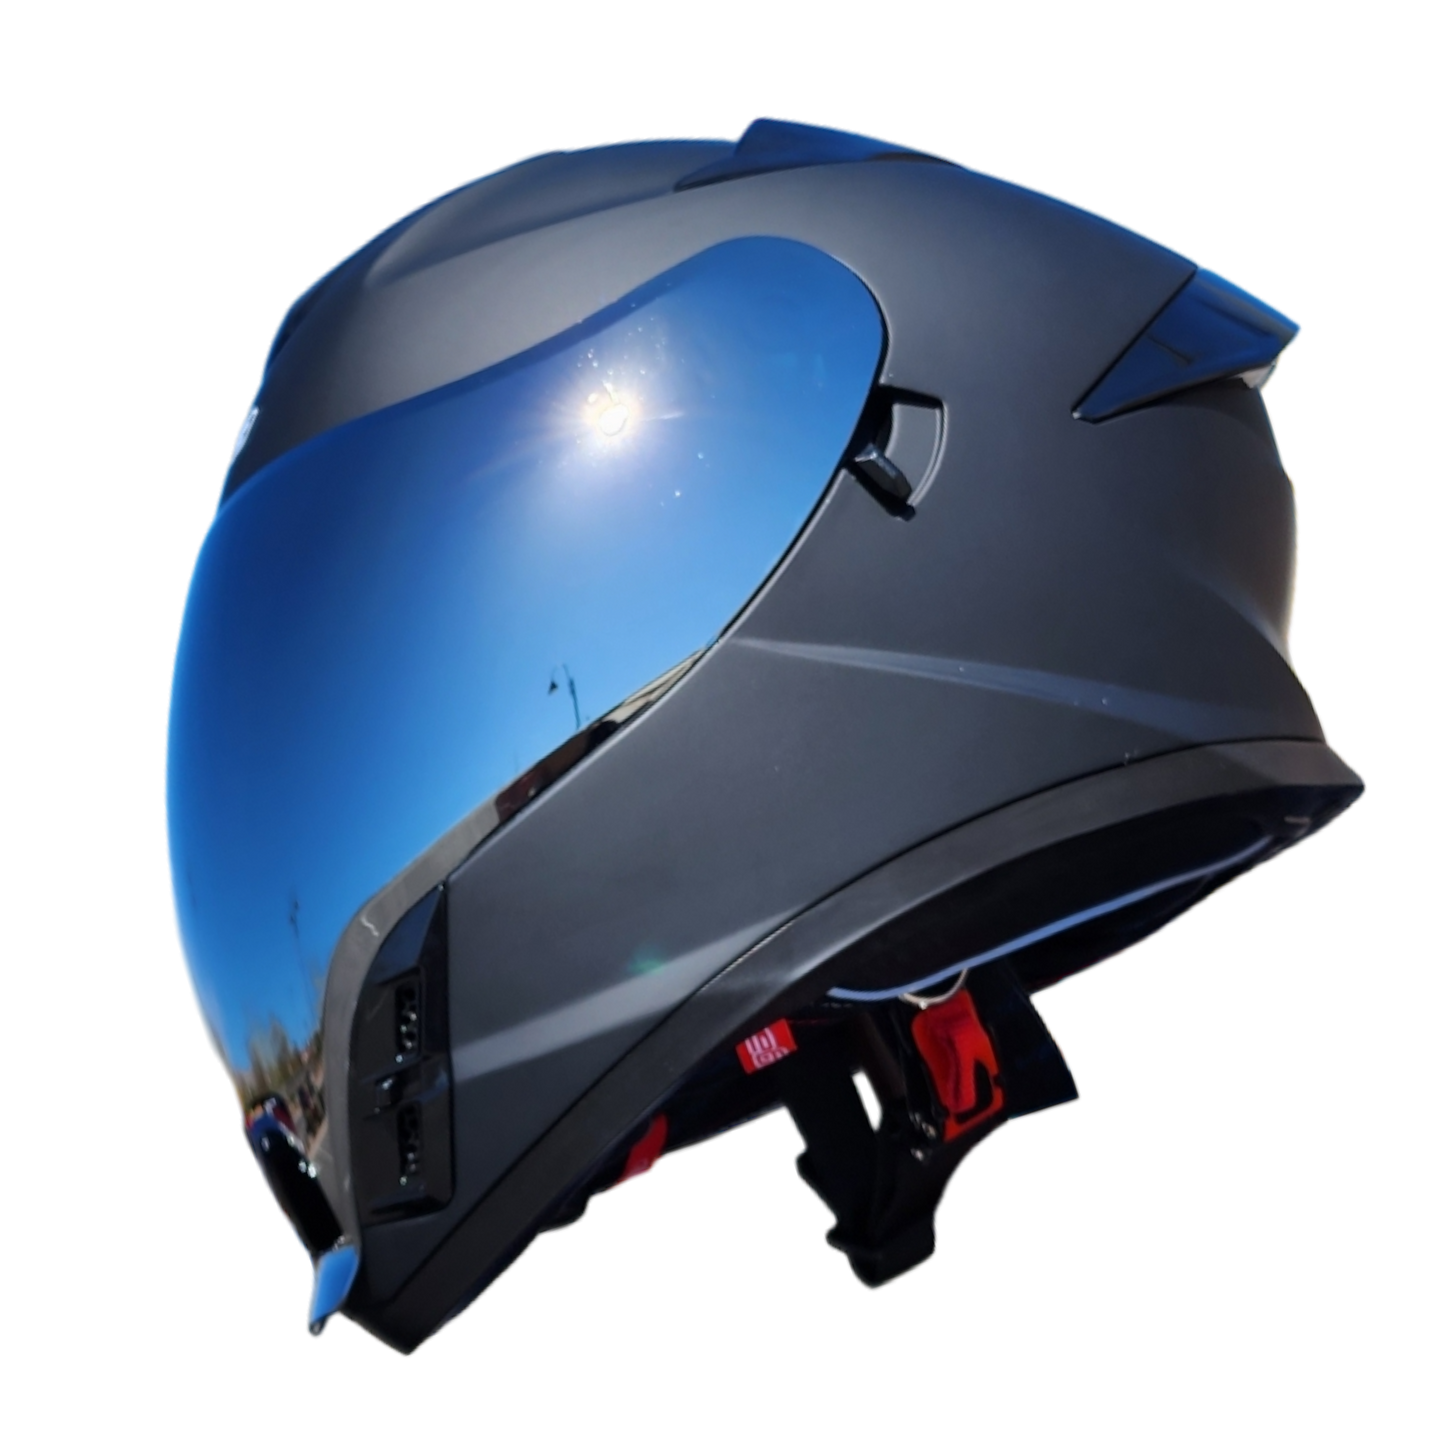 Vega AIR GPX Helmet - Special Innovated Design